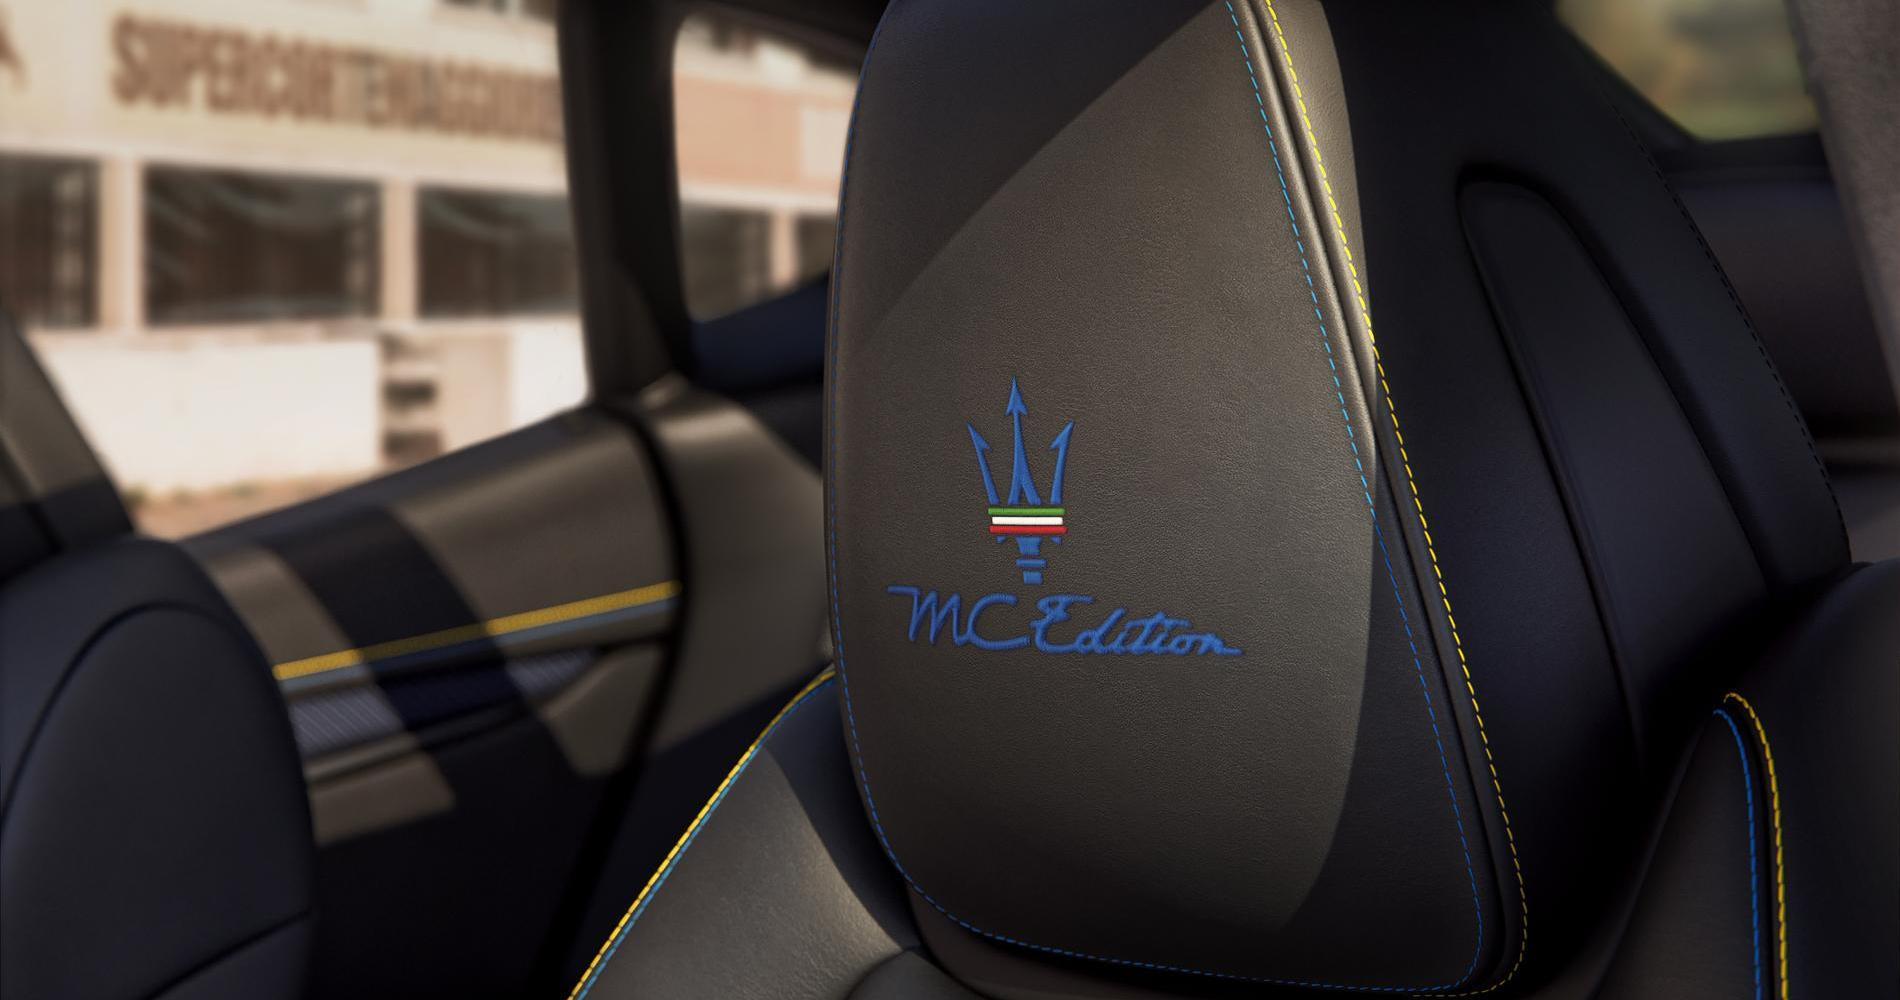 Maserati MC EDITION 8